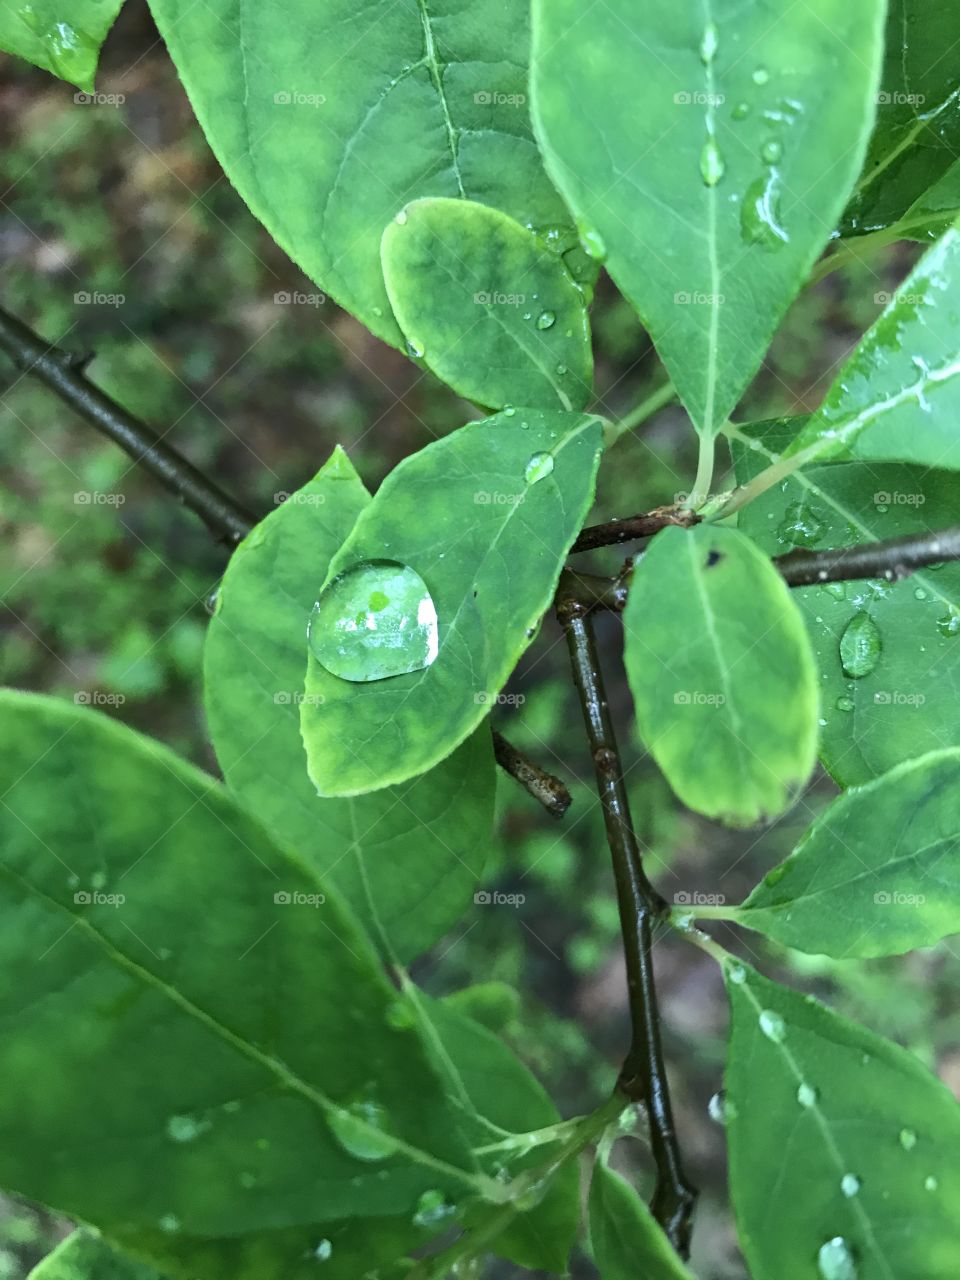 Drop leaf 